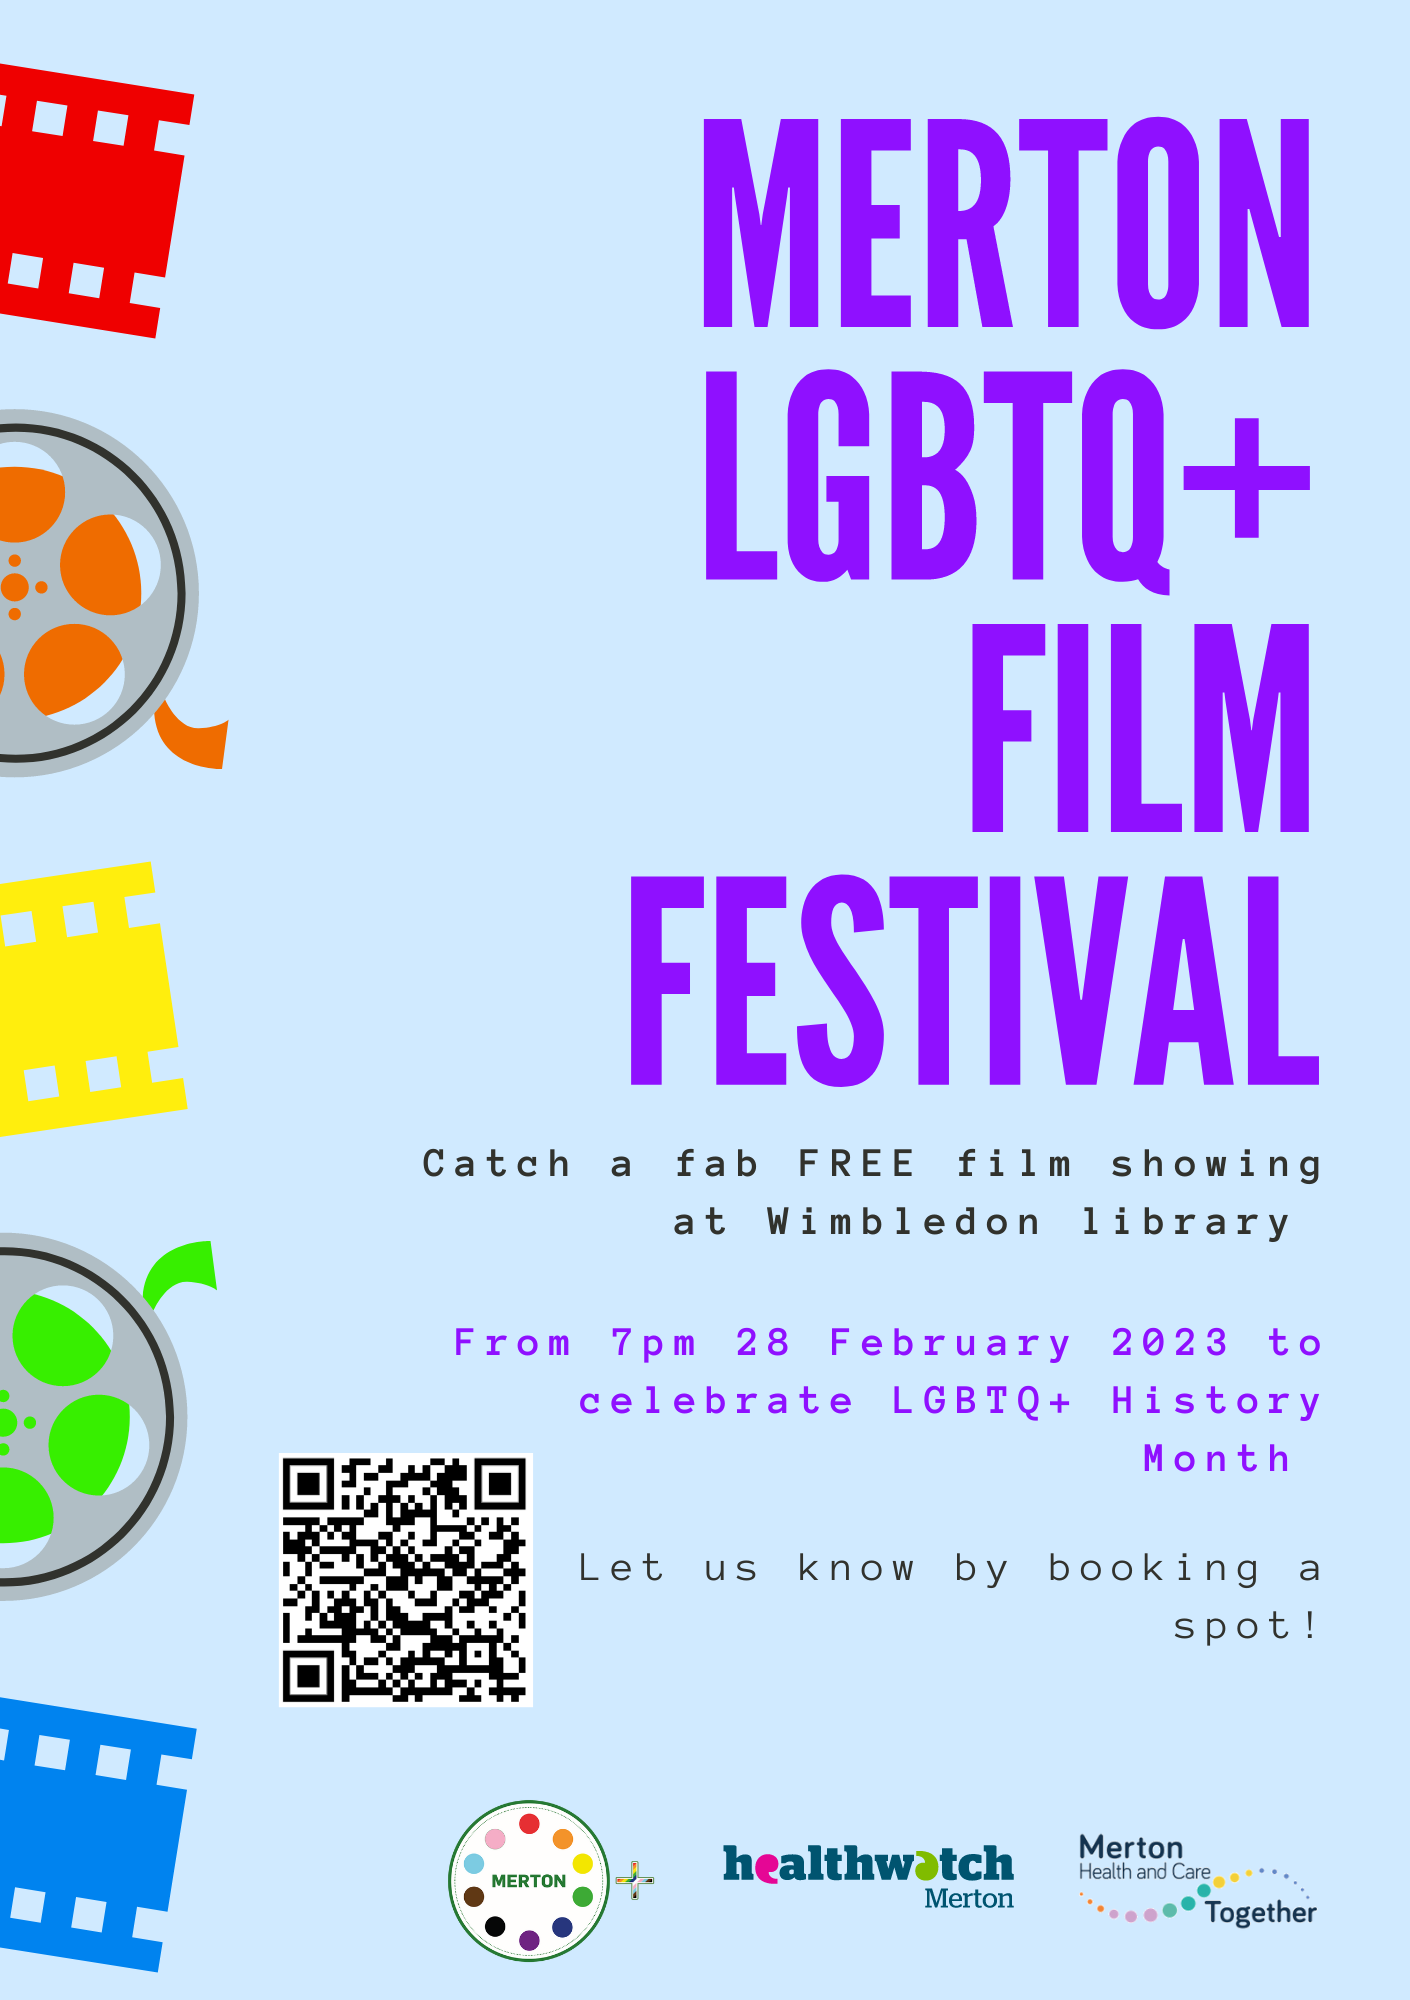 MERTON LGBTQ + FILM FESTIVAL poster